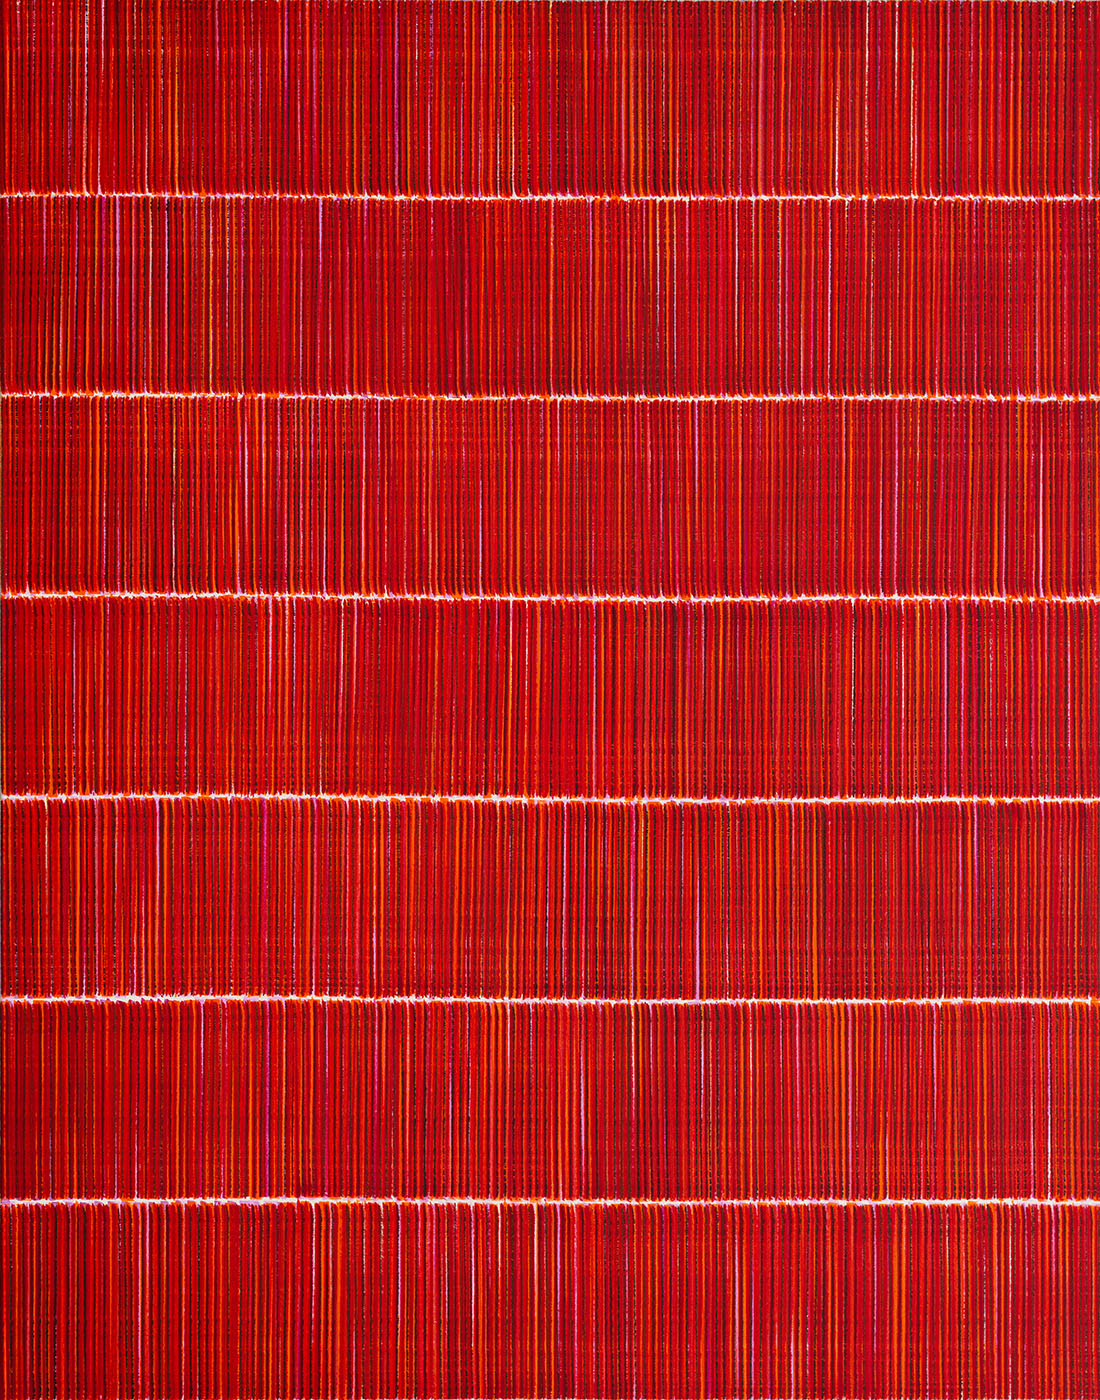 Nikola Dimitrov, FarbKlang V, 2019, Pigmente, Bindemittel auf Leinwand, 140 × 110 cm